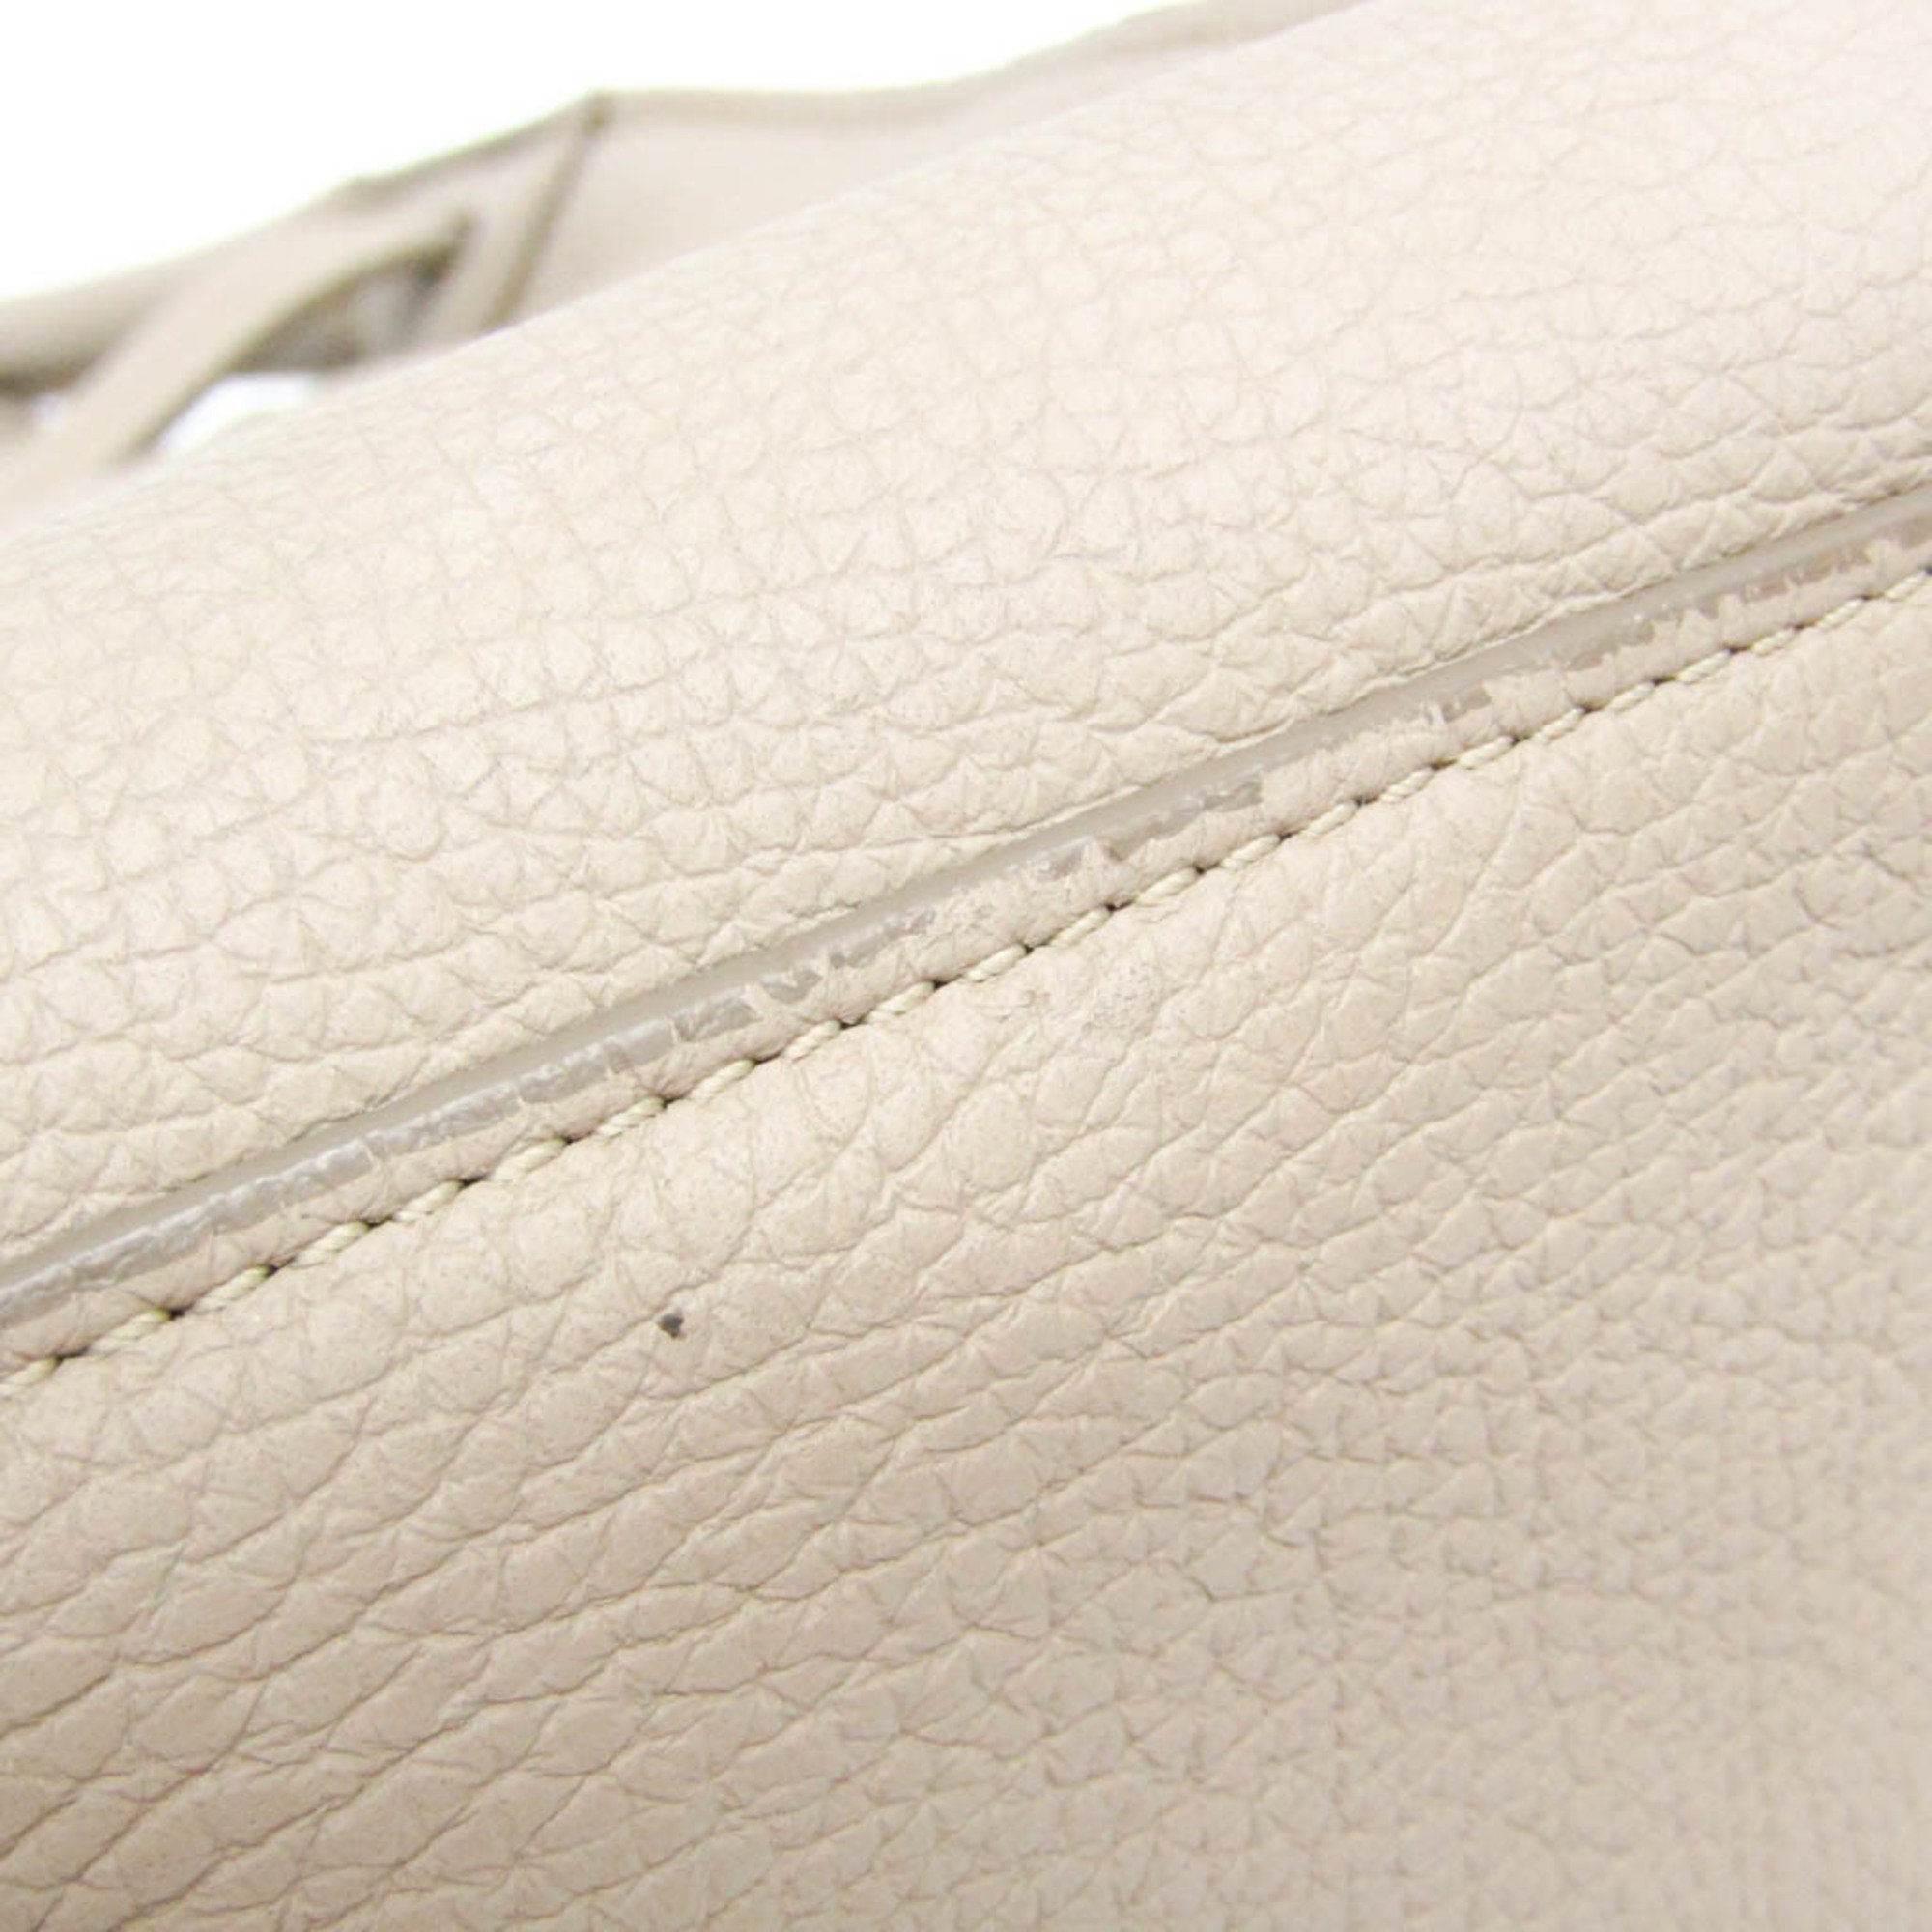 Celine Big Bag Small 183313 Women's Leather Handbag,Shoulder Bag Grayish